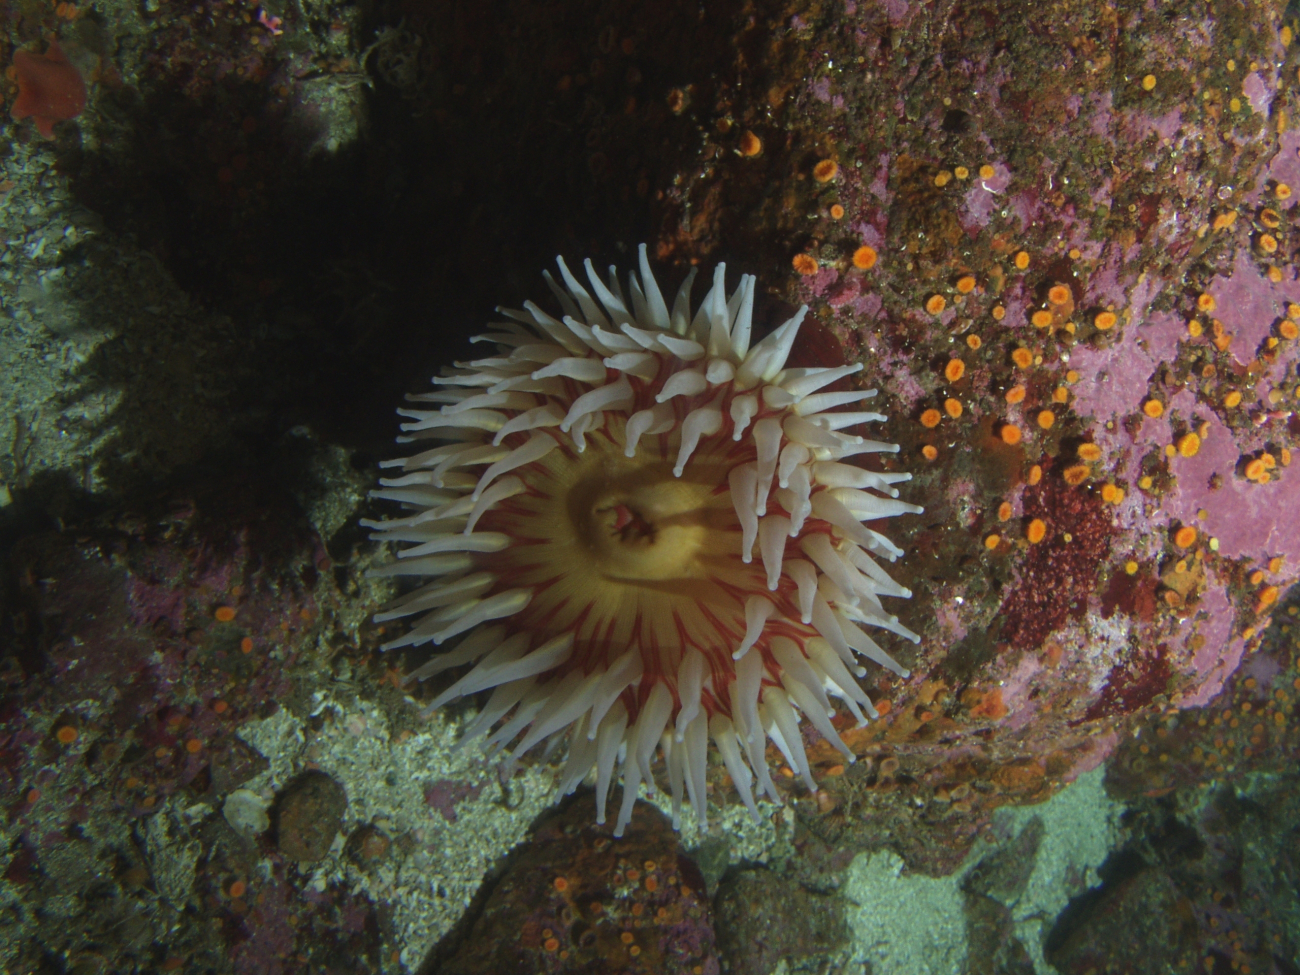 Fish eating anemone (Urticina piscivora on boulder in rocky habitat